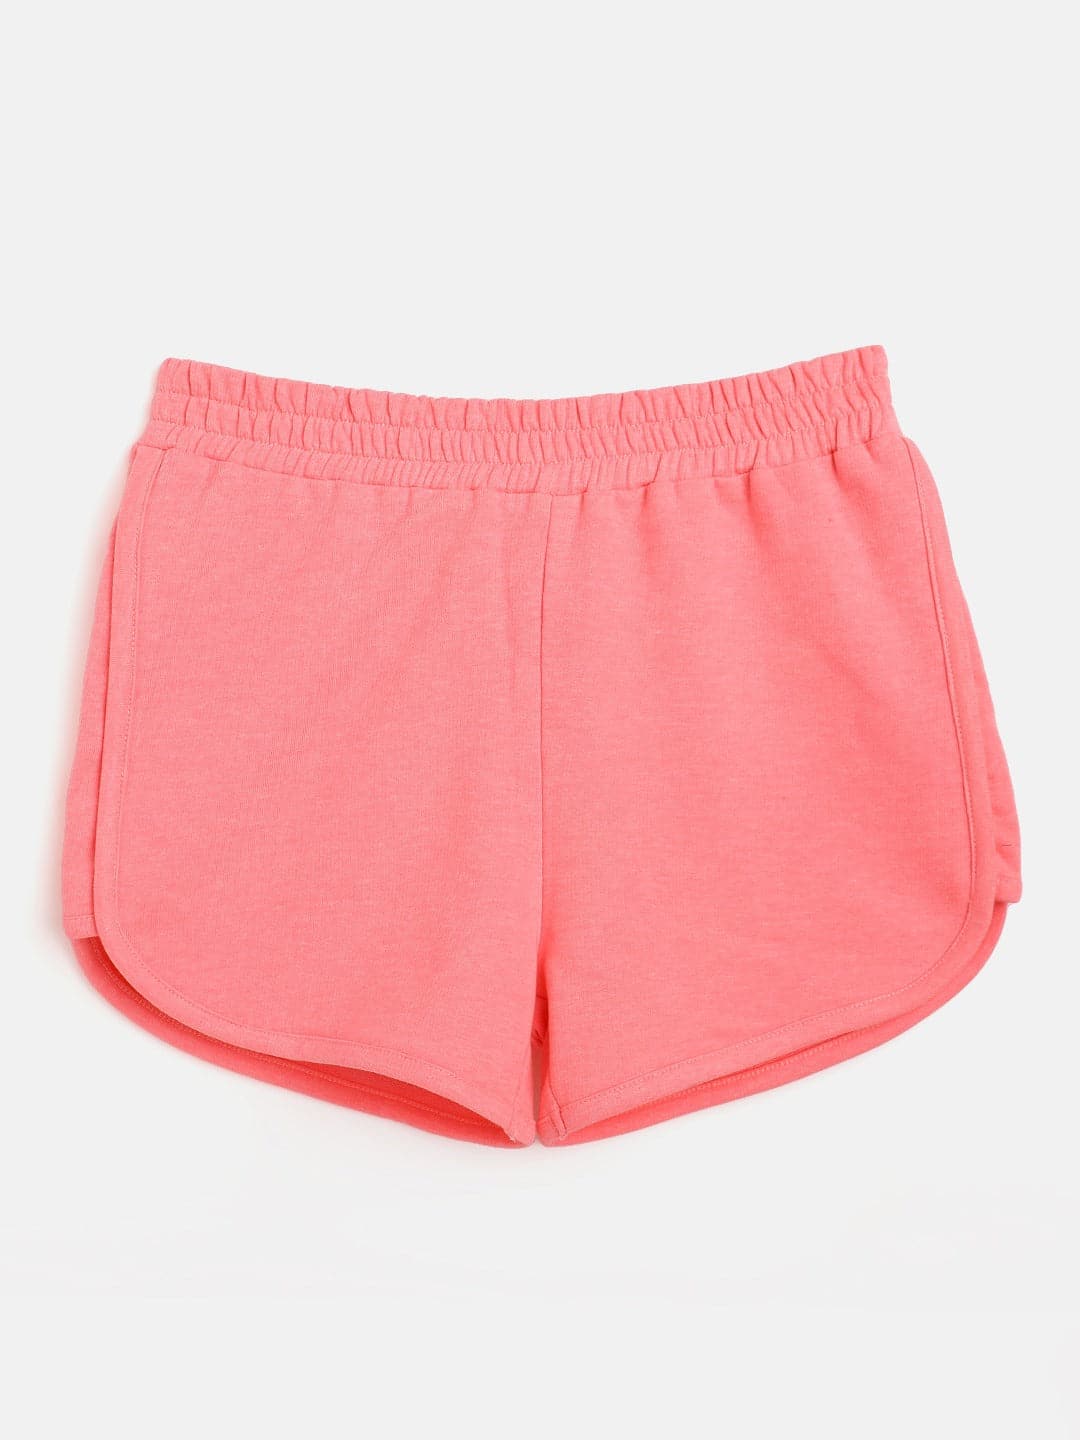 Girls Neon Pink Terry Solid Shorts-Girls Shorts-SASSAFRAS